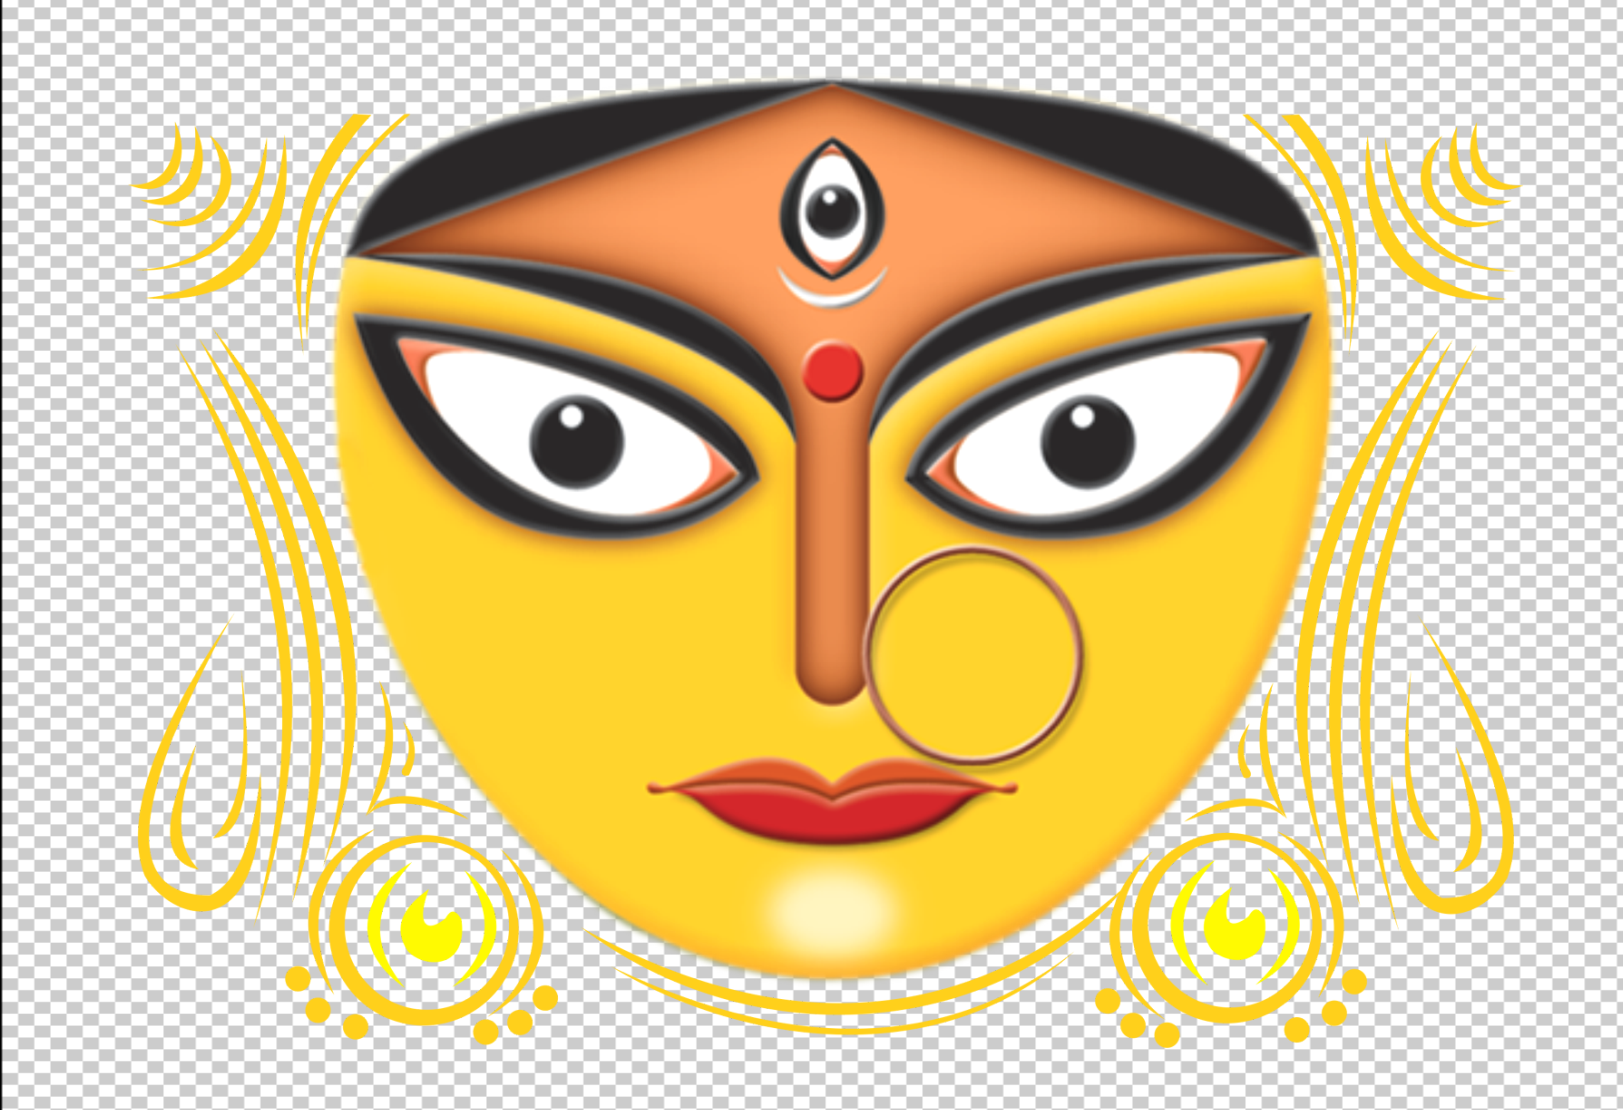 Durga Face PNG Transprent HD Images Download - FREE Vector Design - Cdr,  Ai, EPS, PNG, SVG